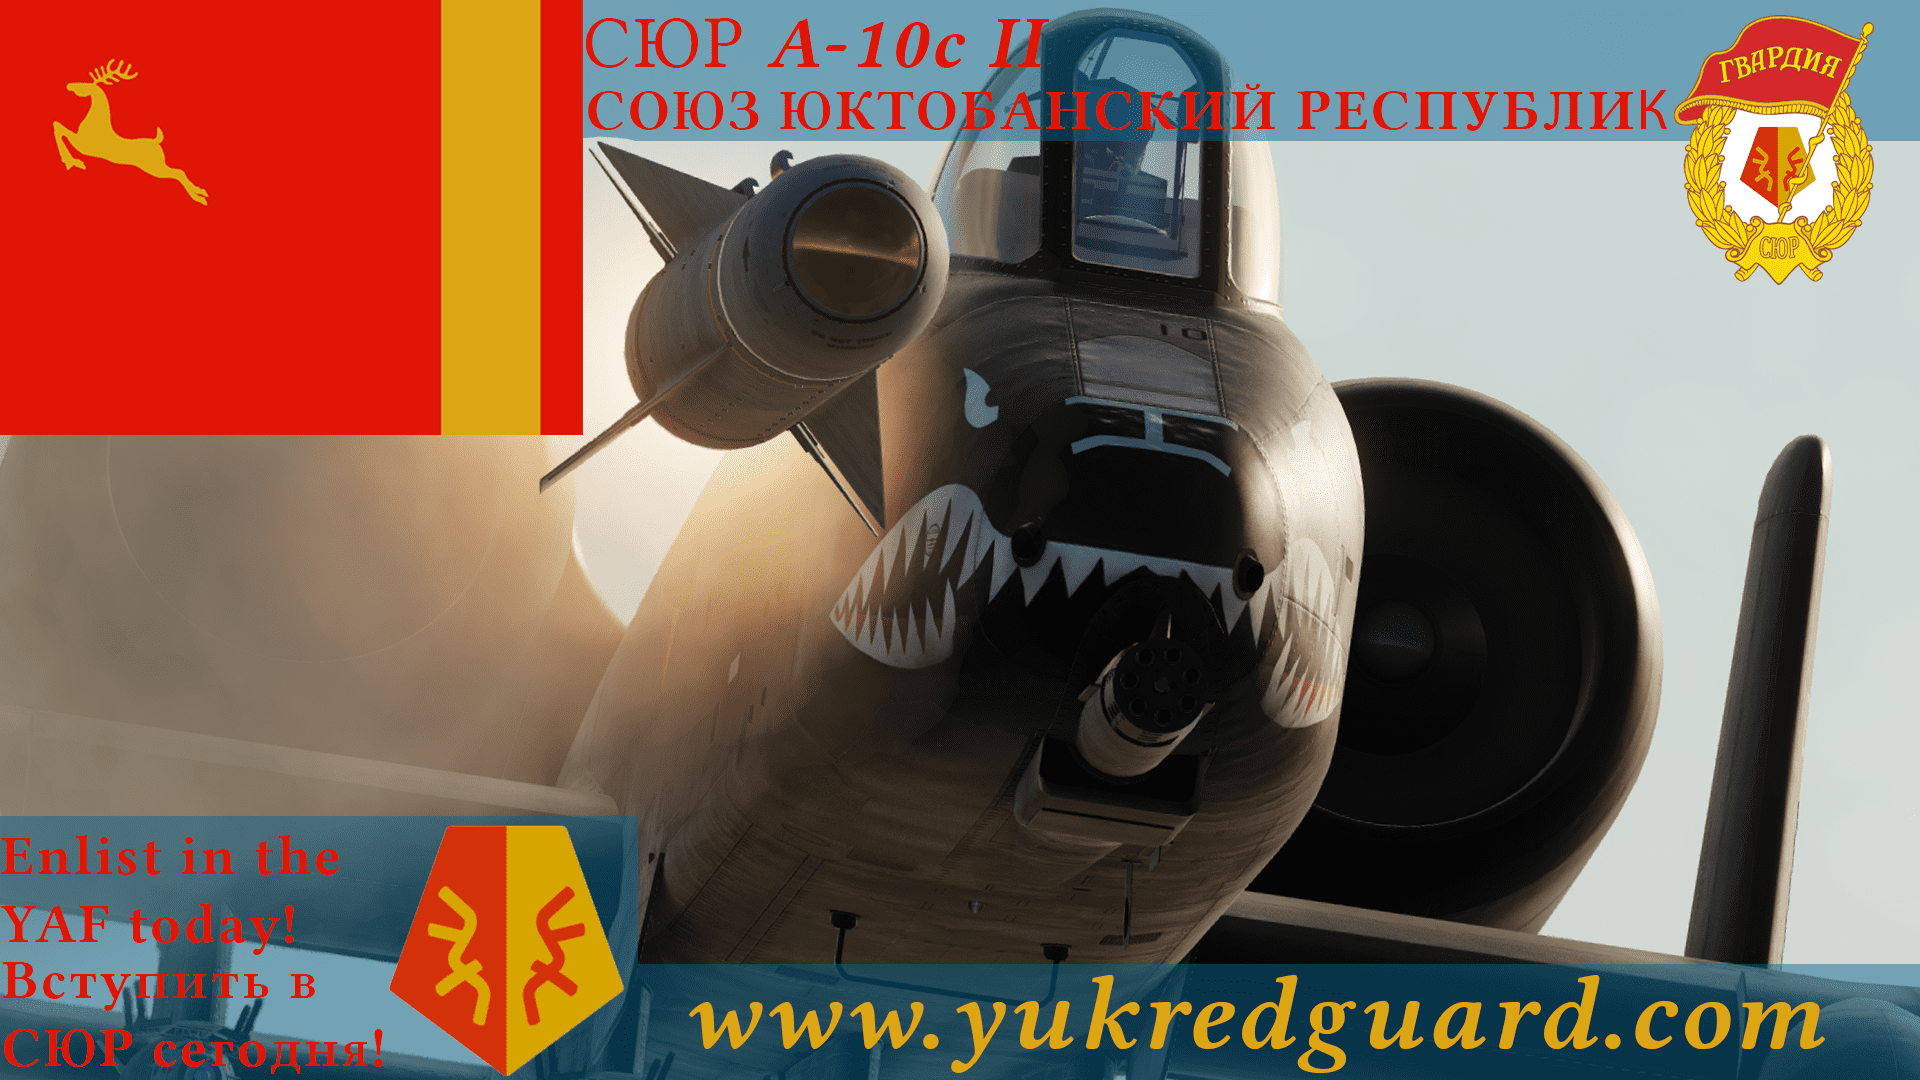 Yuktobanian Air Force A-10C II - Ace Combat - Yuktobanian Red Guard